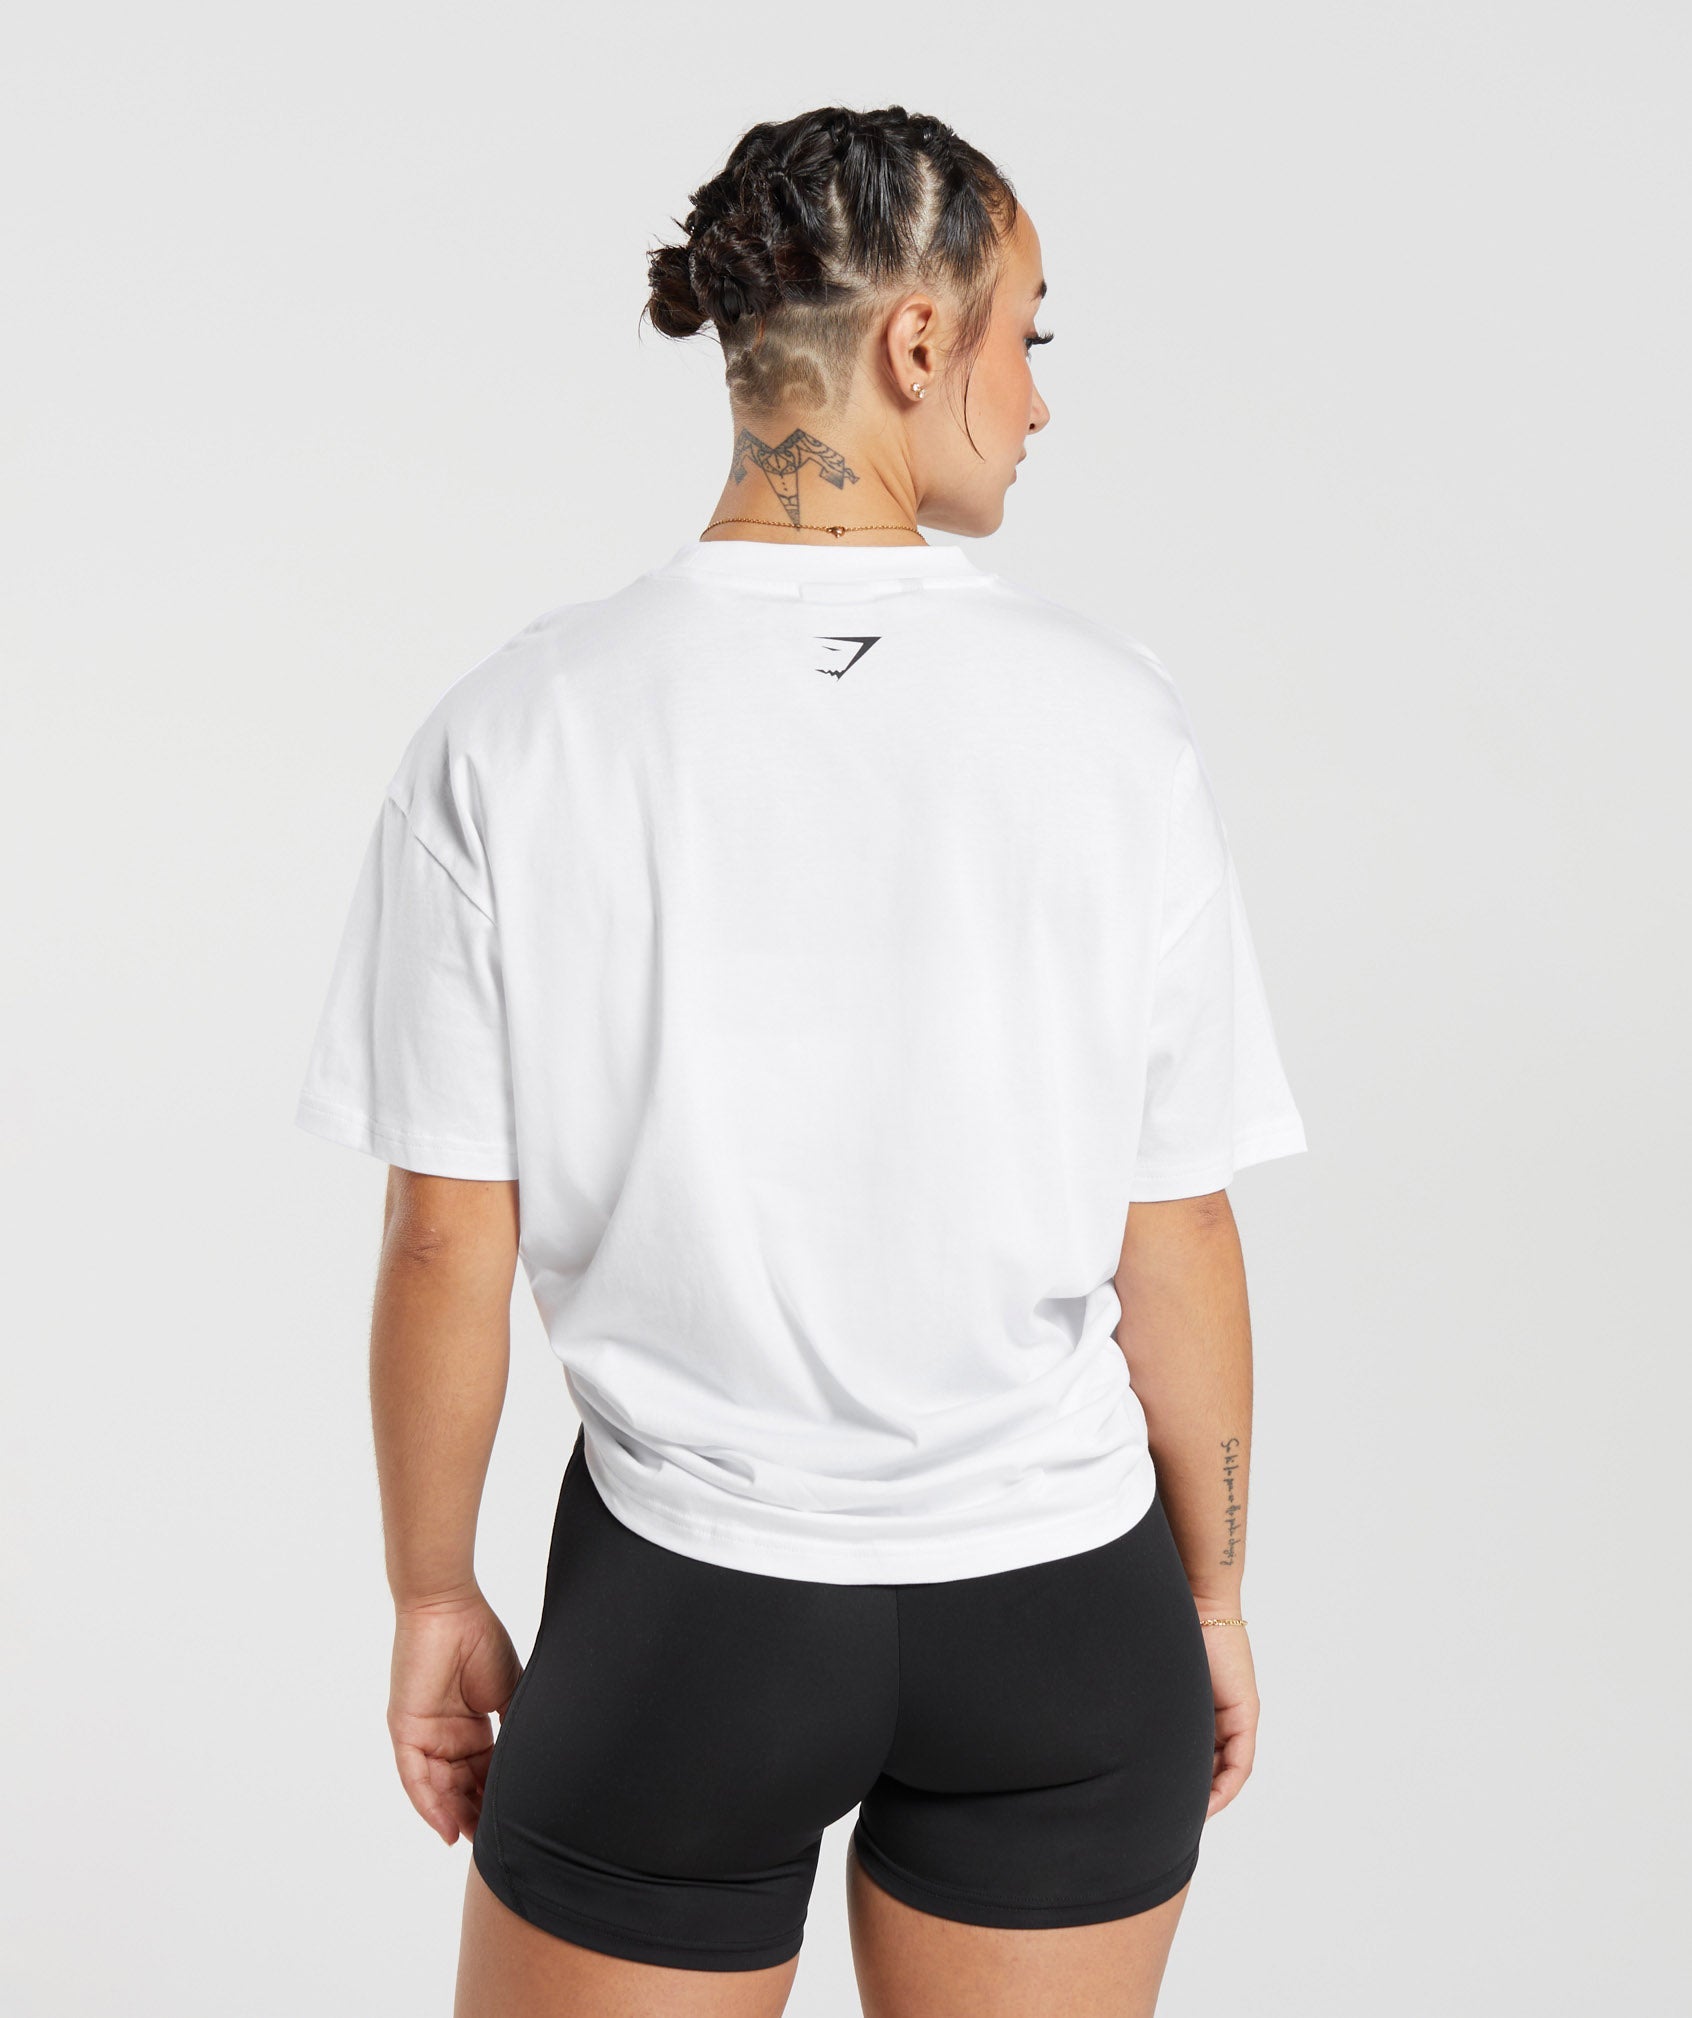 Gymshark Lifting Essentials Graphic Oversized Sweatshirt - White